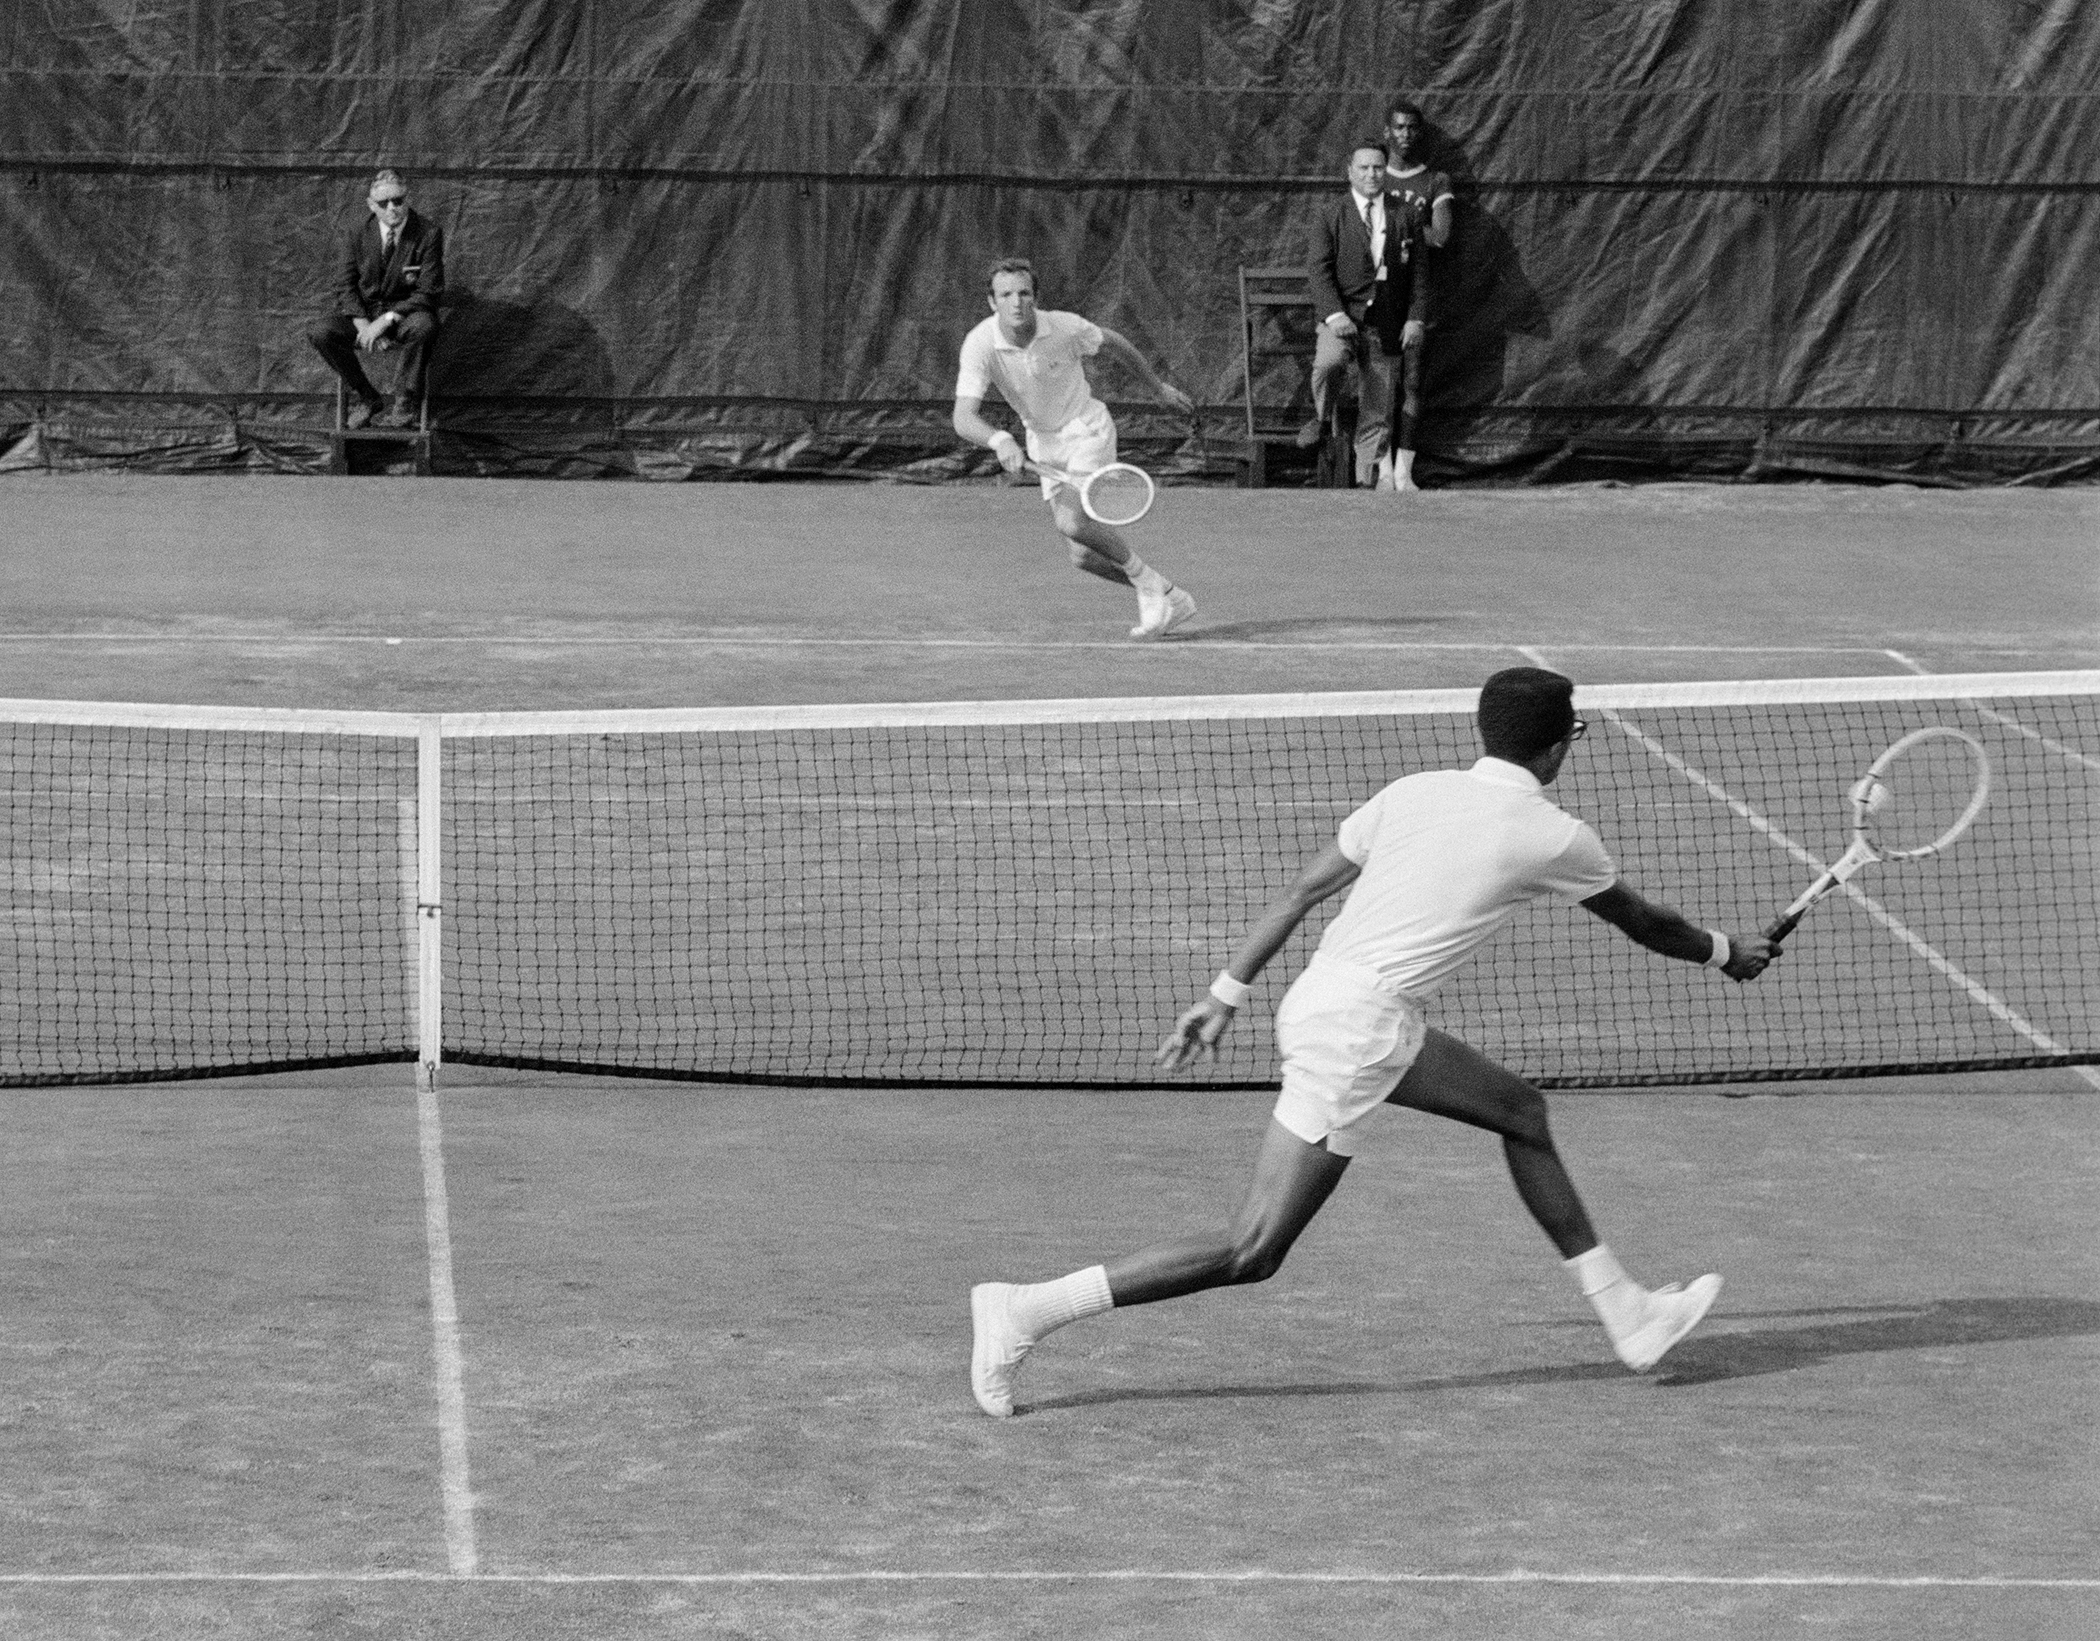 Arthur Ashe at the 1968 US Open Tennis Championships, September 9-10, 1968. Photo by John G. Zimmerman.